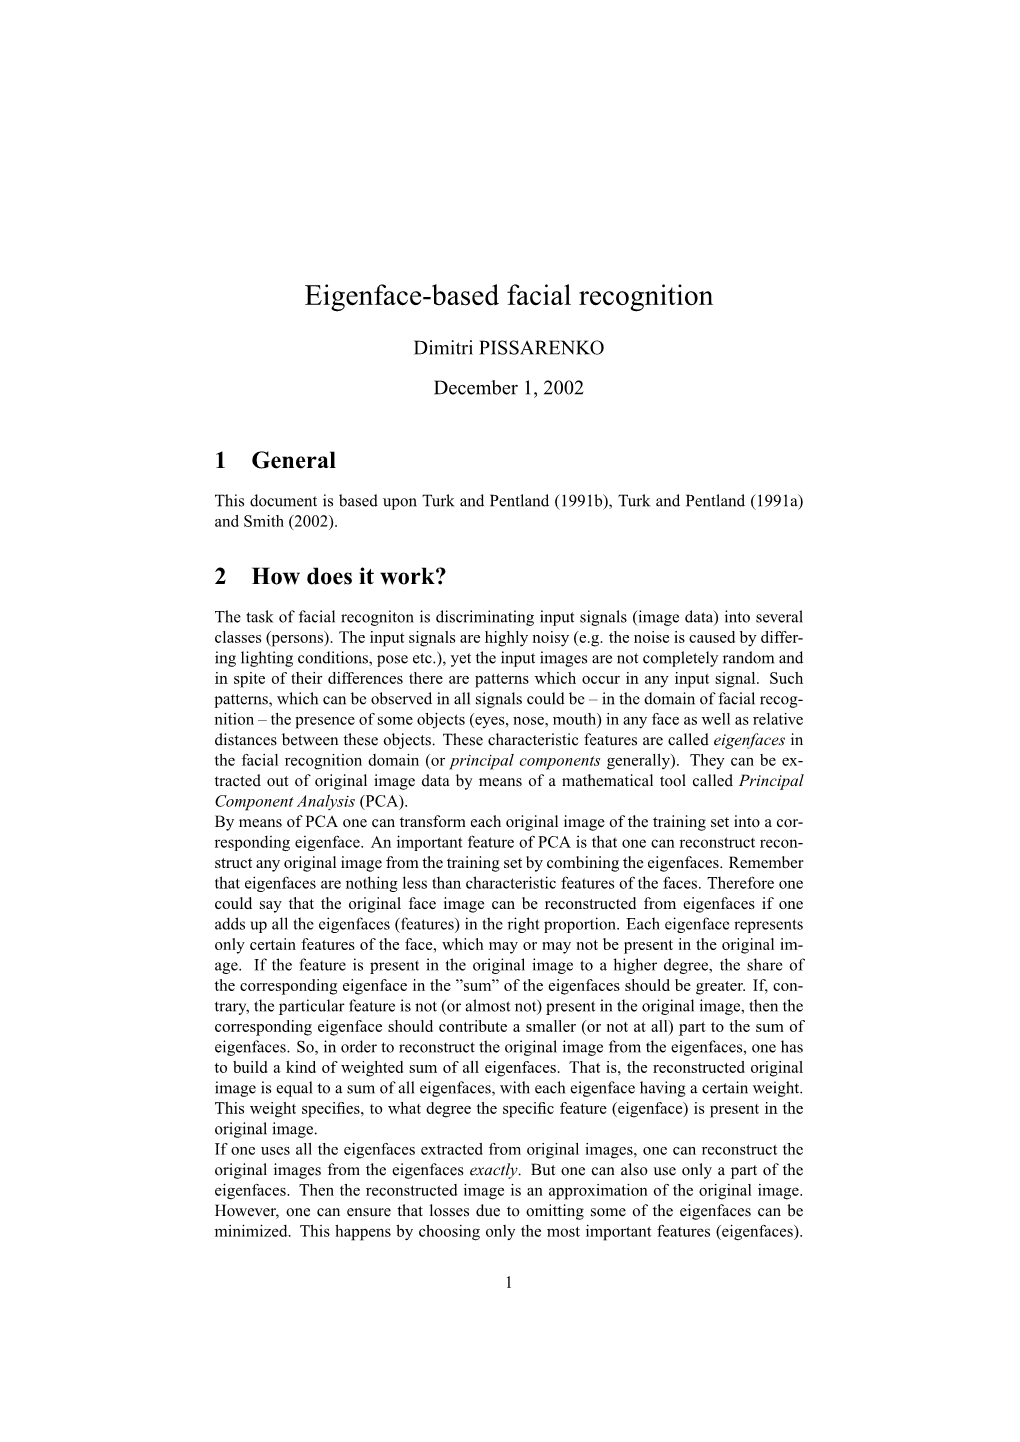 Eigenface-Based Facial Recognition